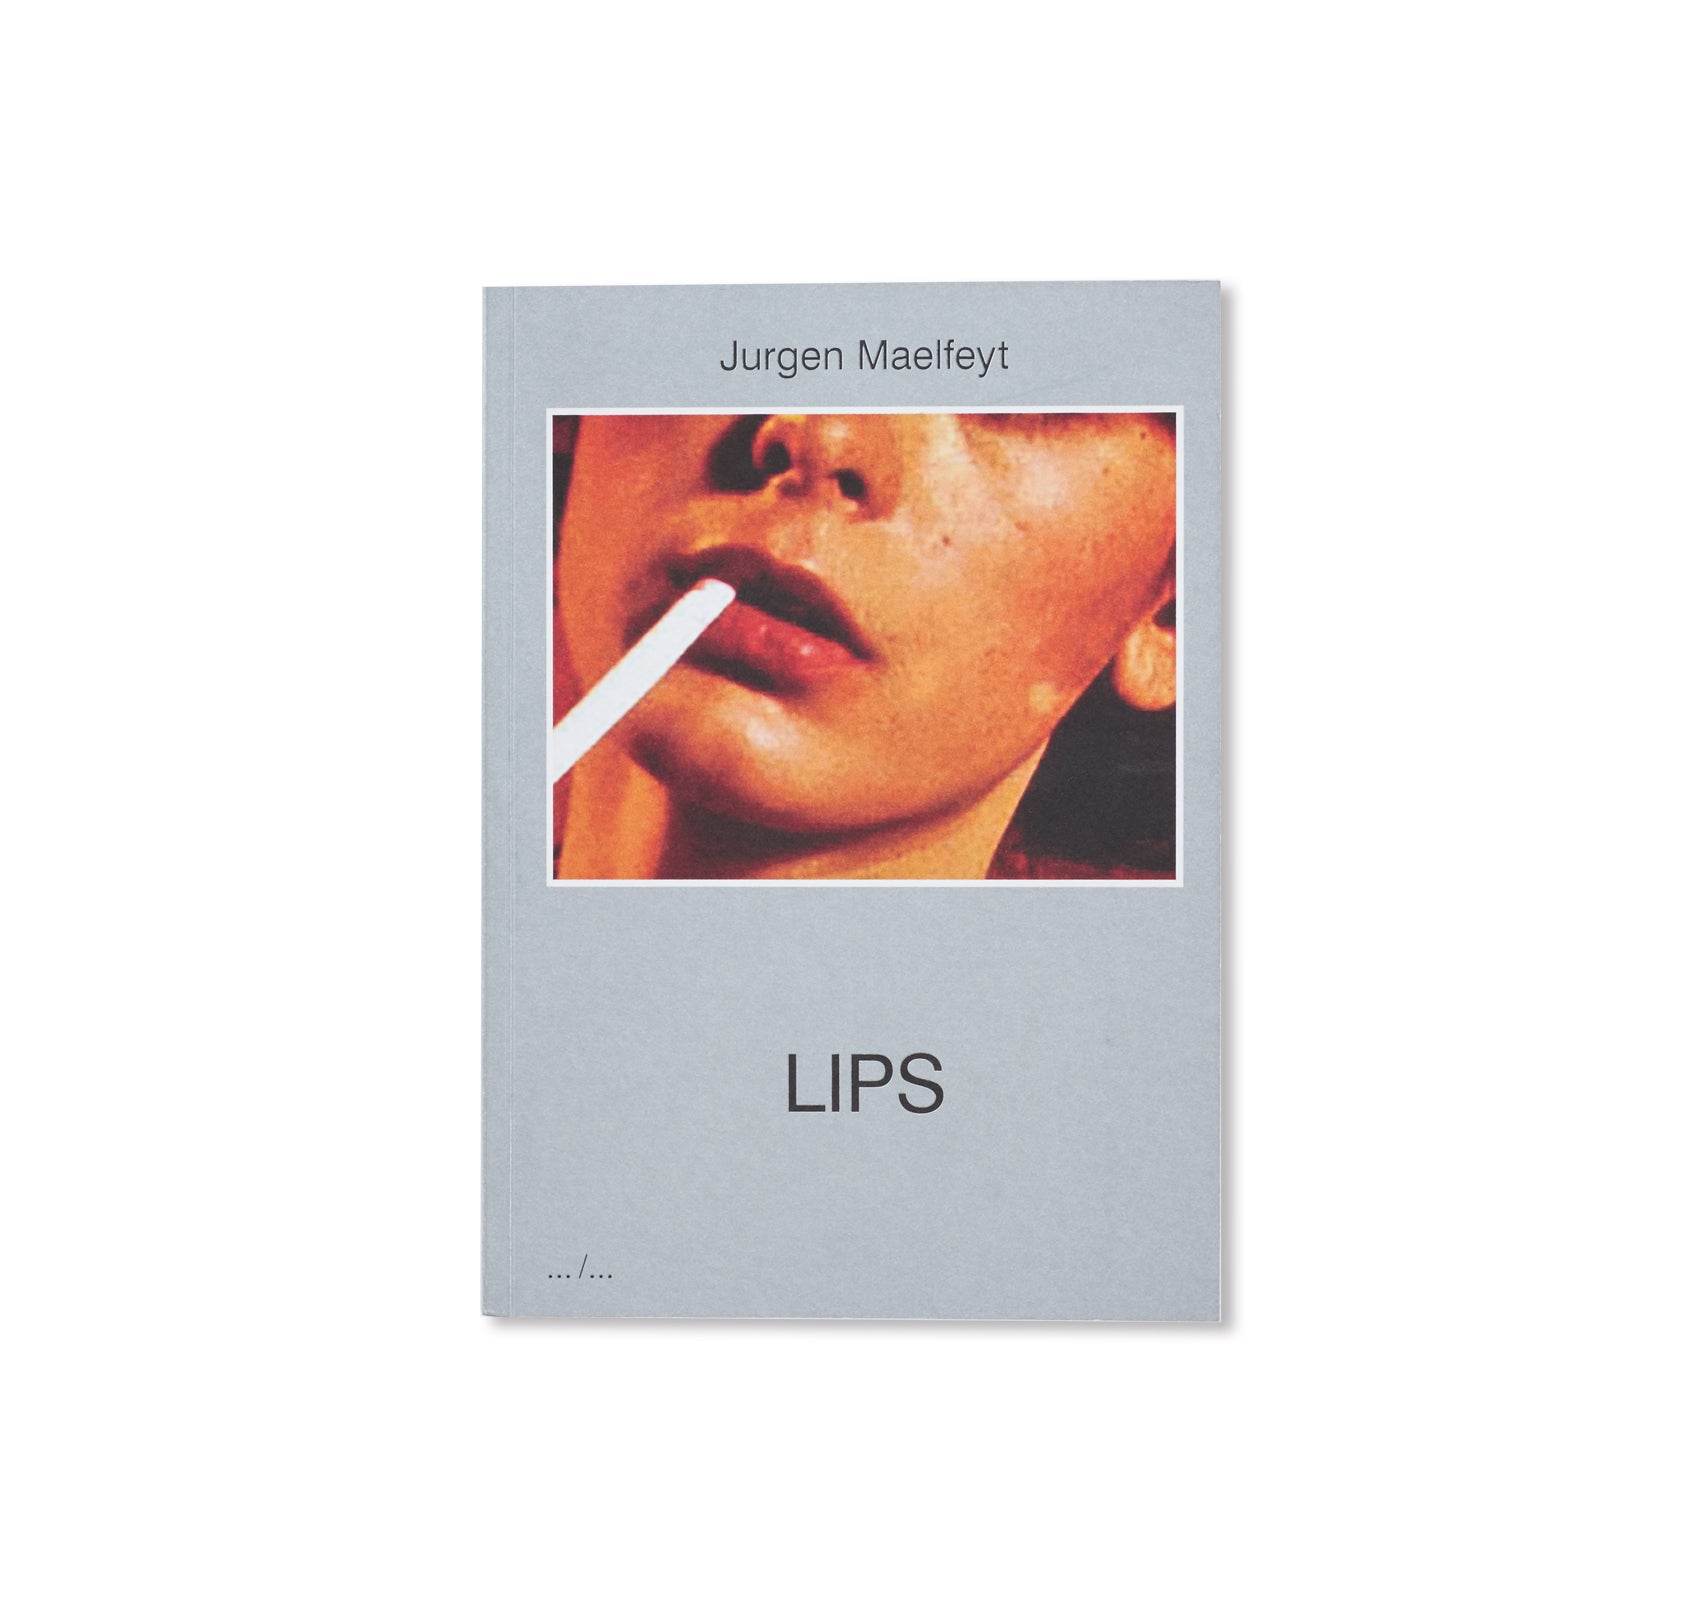 LIPS by Jurgen Maelfeyt